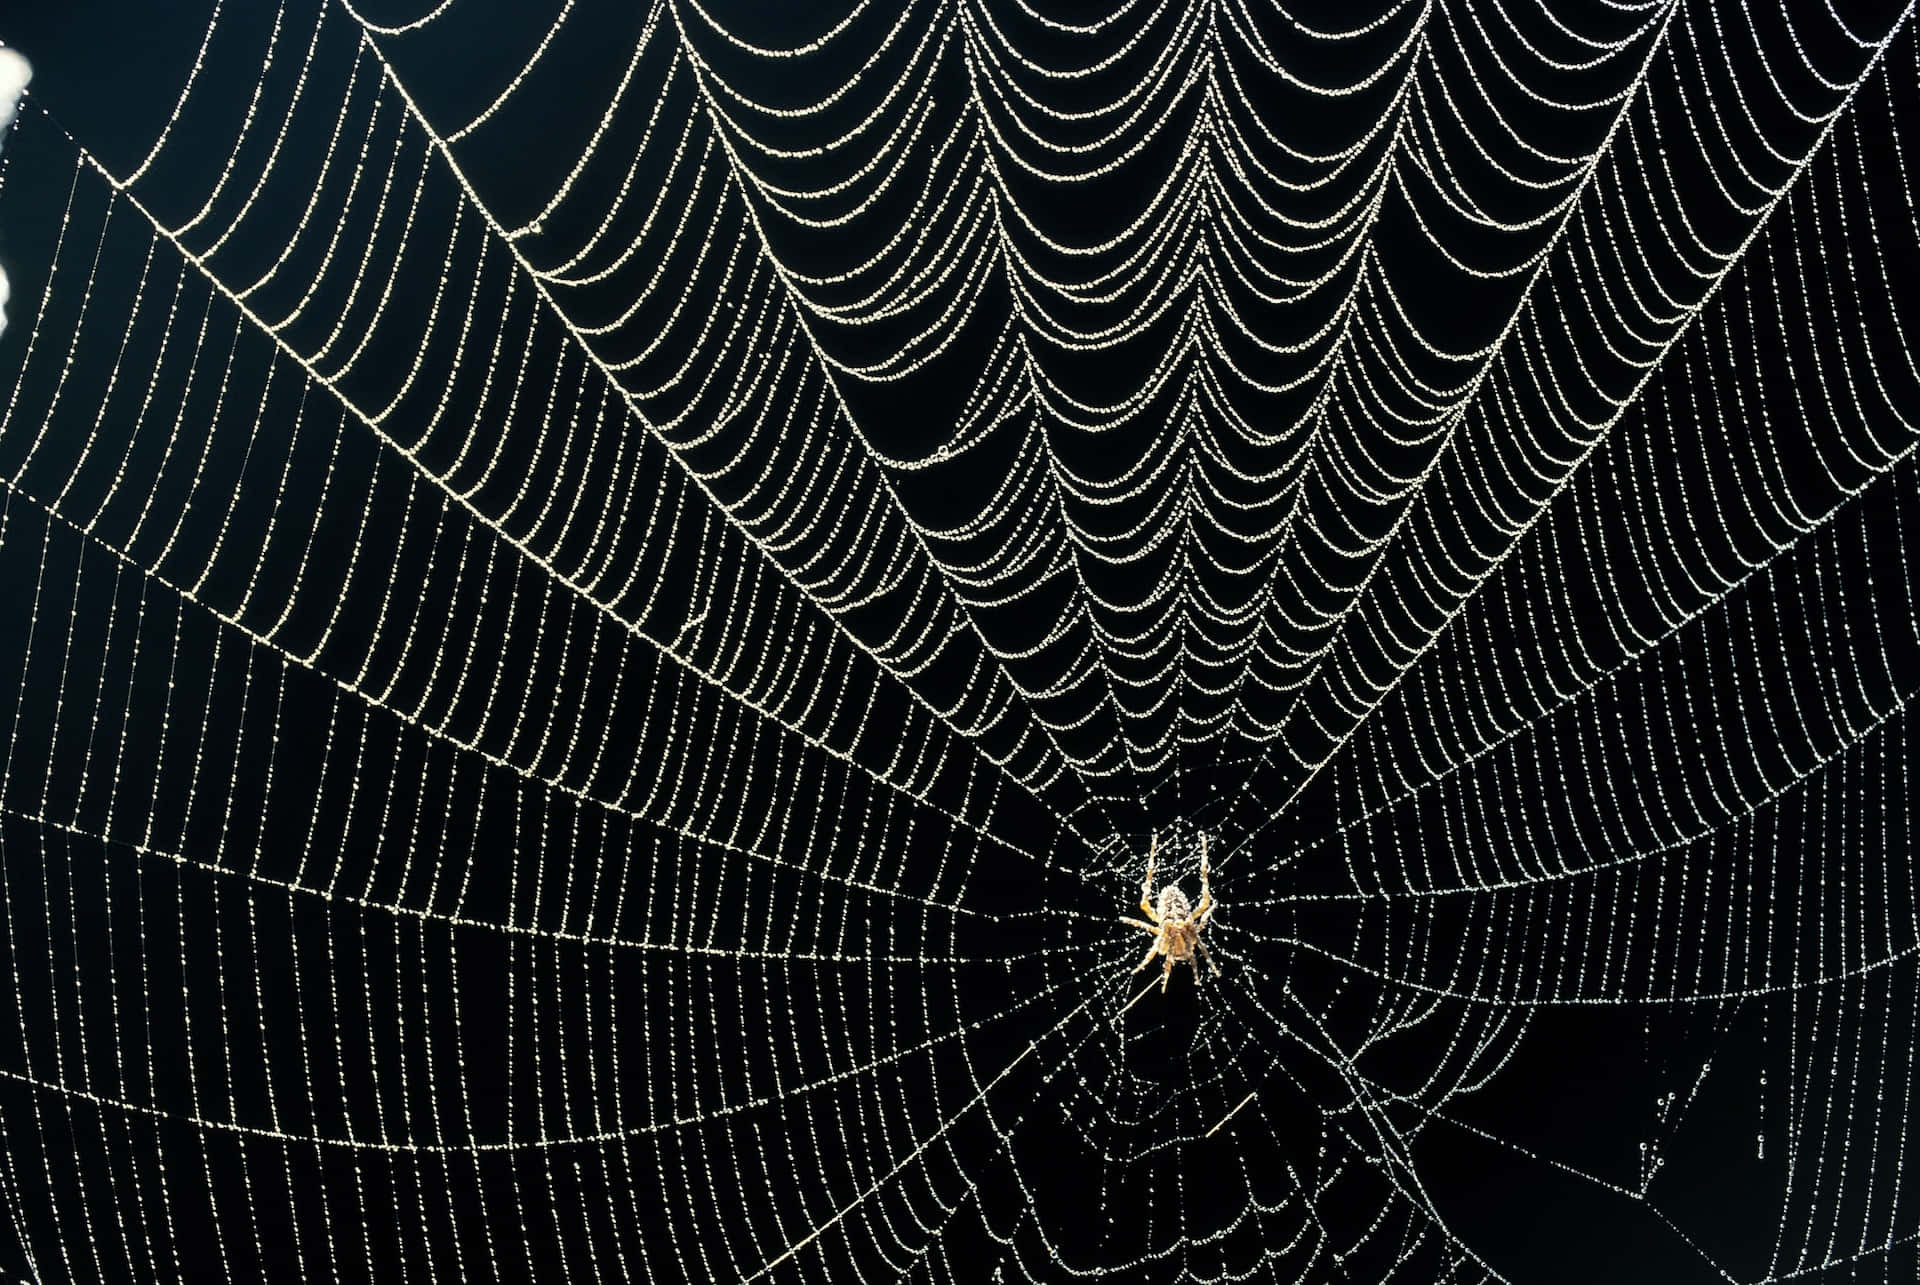 Dewy Spider Webwith Spider Center Wallpaper